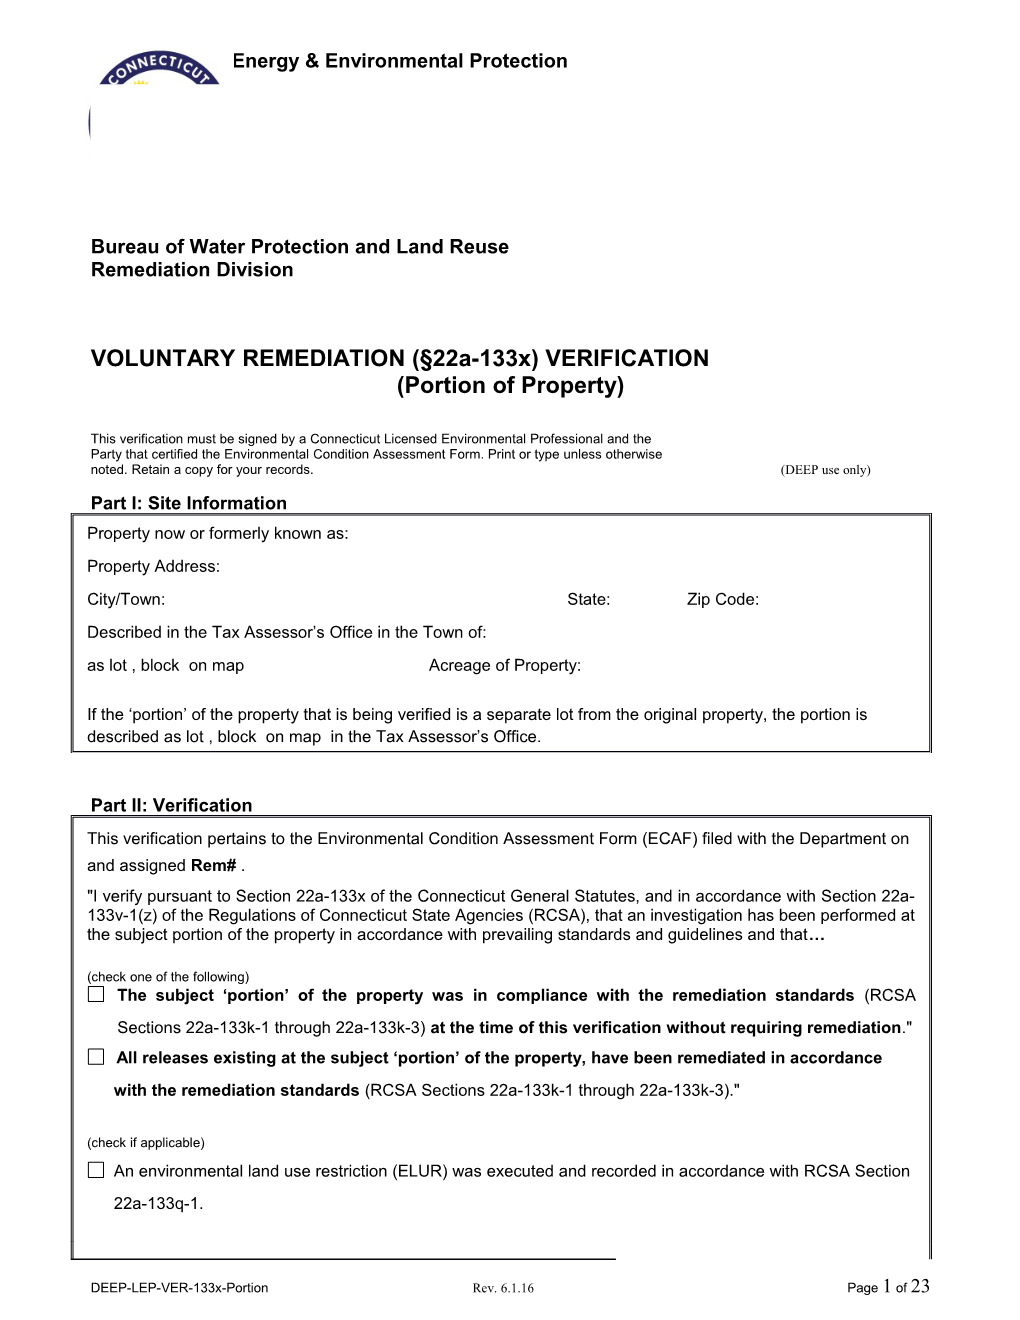 VOLUNTARY REMEDIATION ( 22A-133X) VERIFICATION (Portion)